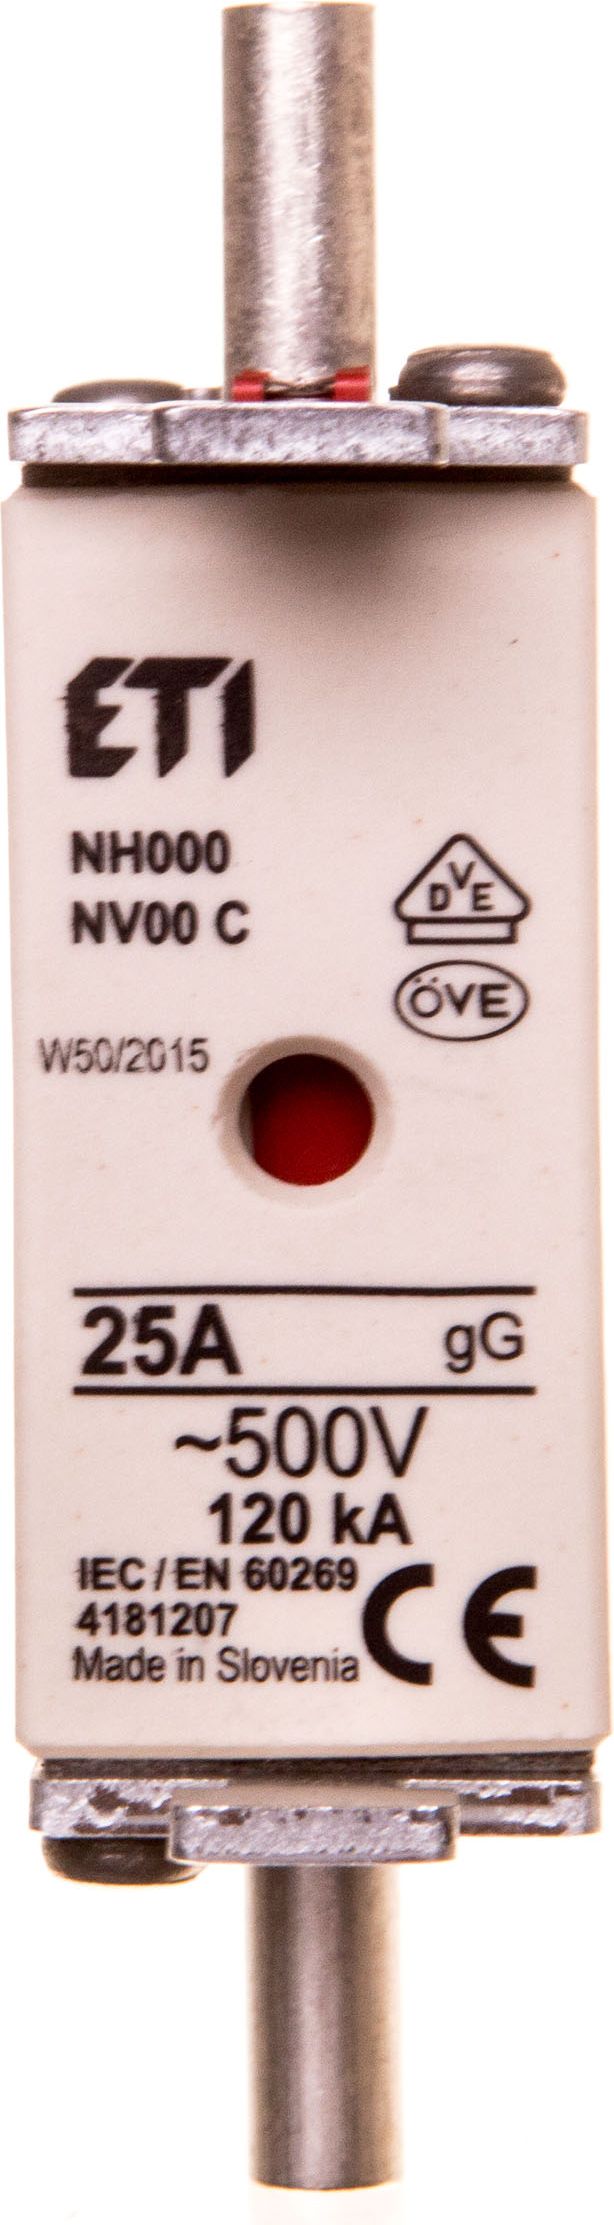 Siguranță COMBI NH00C 25A gG / gL 500V WT-00C (004181207)